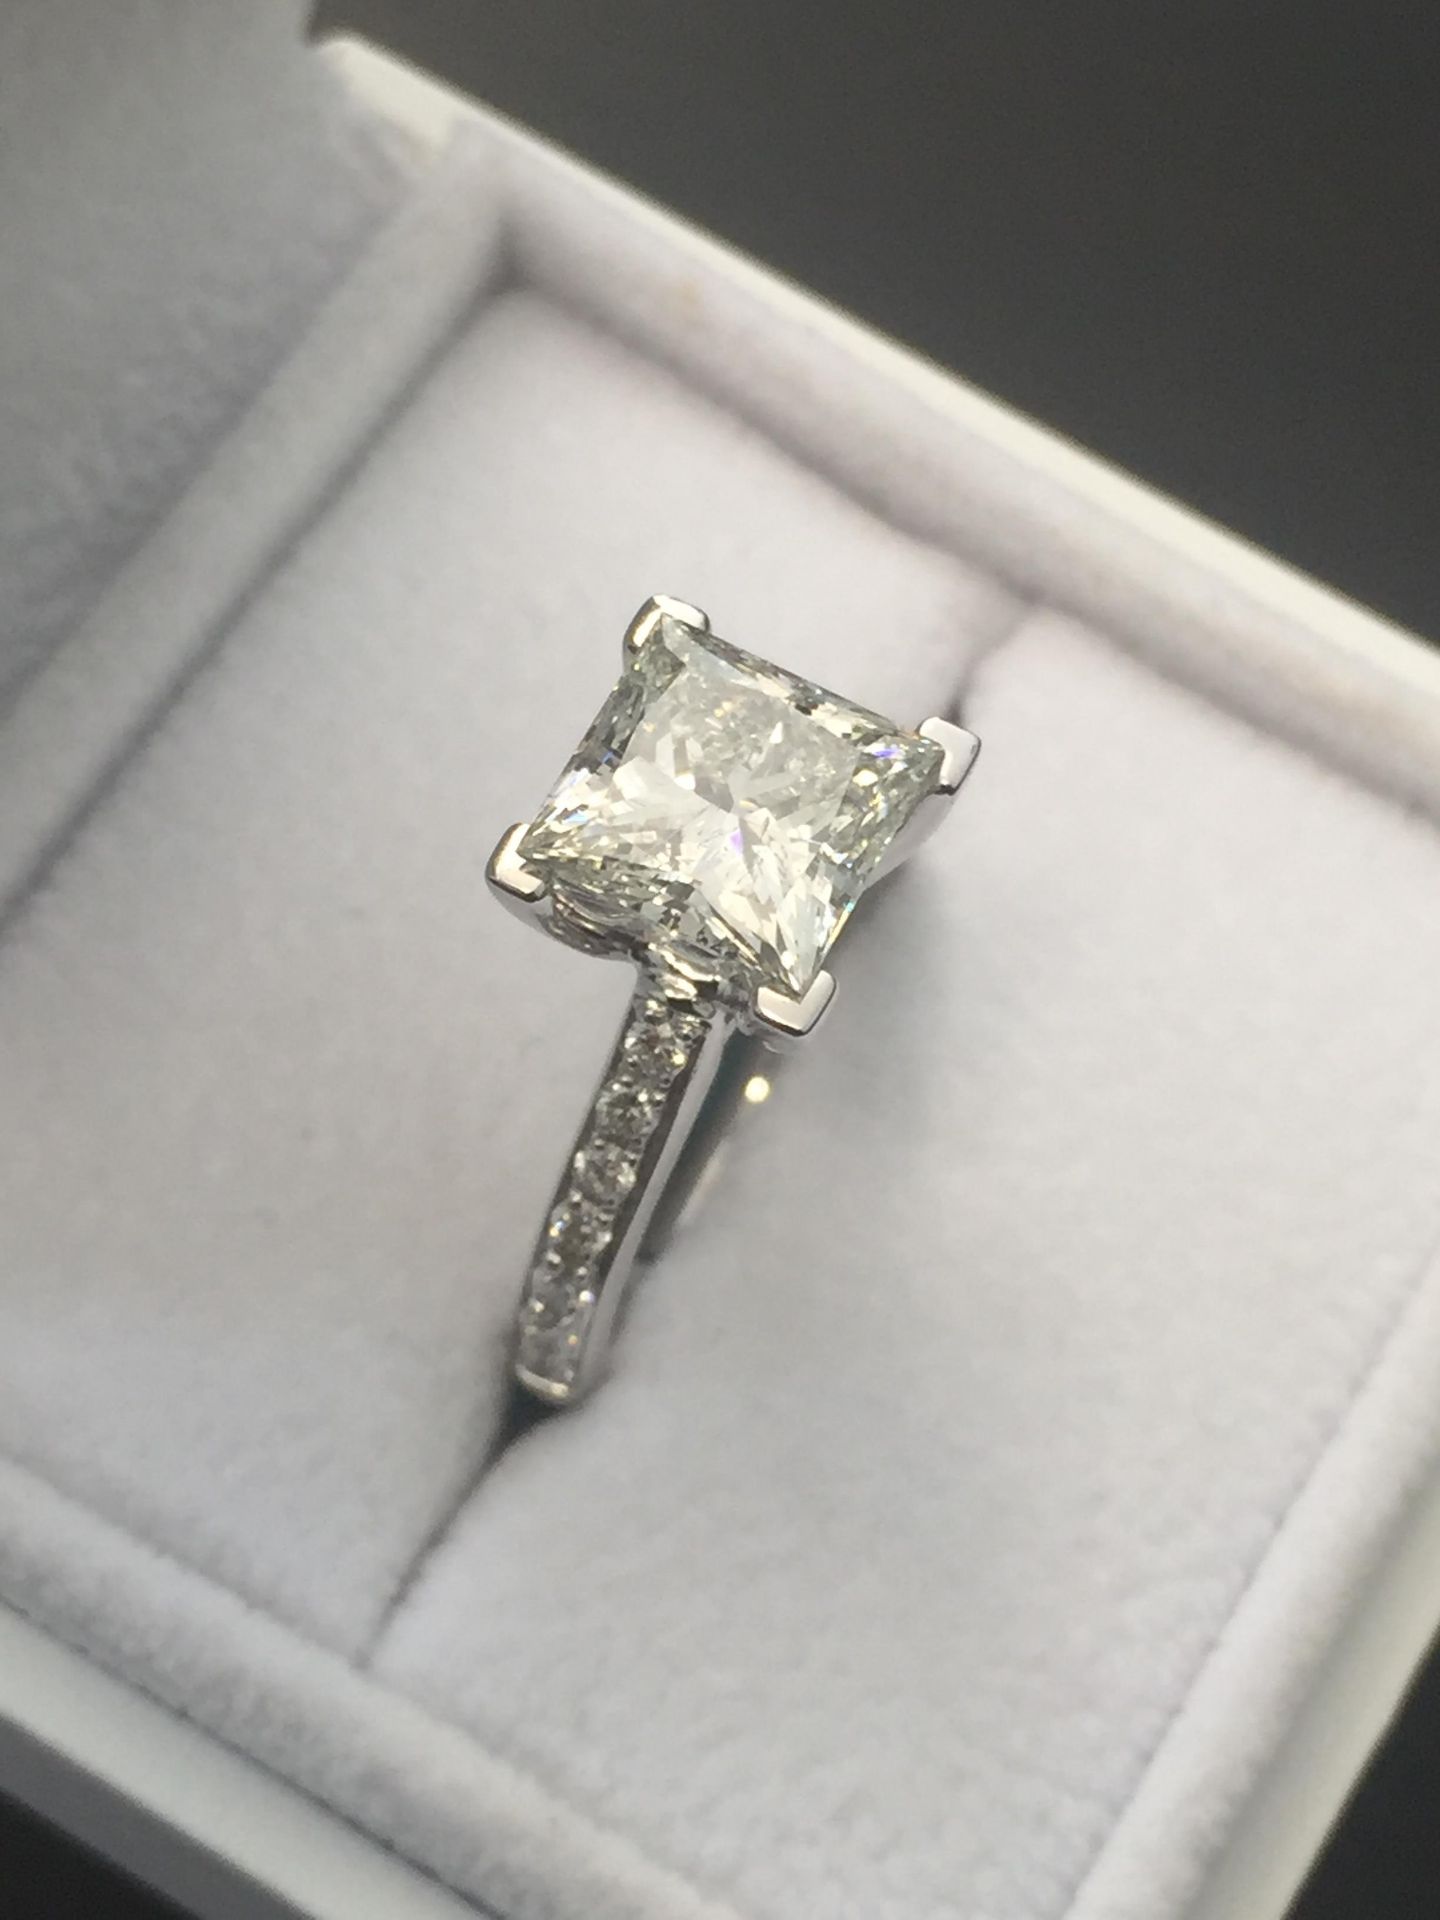 2.09ct Princess cut Diamond H colour si2 clarity,18ct white gold diamond set mount,12x0.02ct - Image 2 of 4